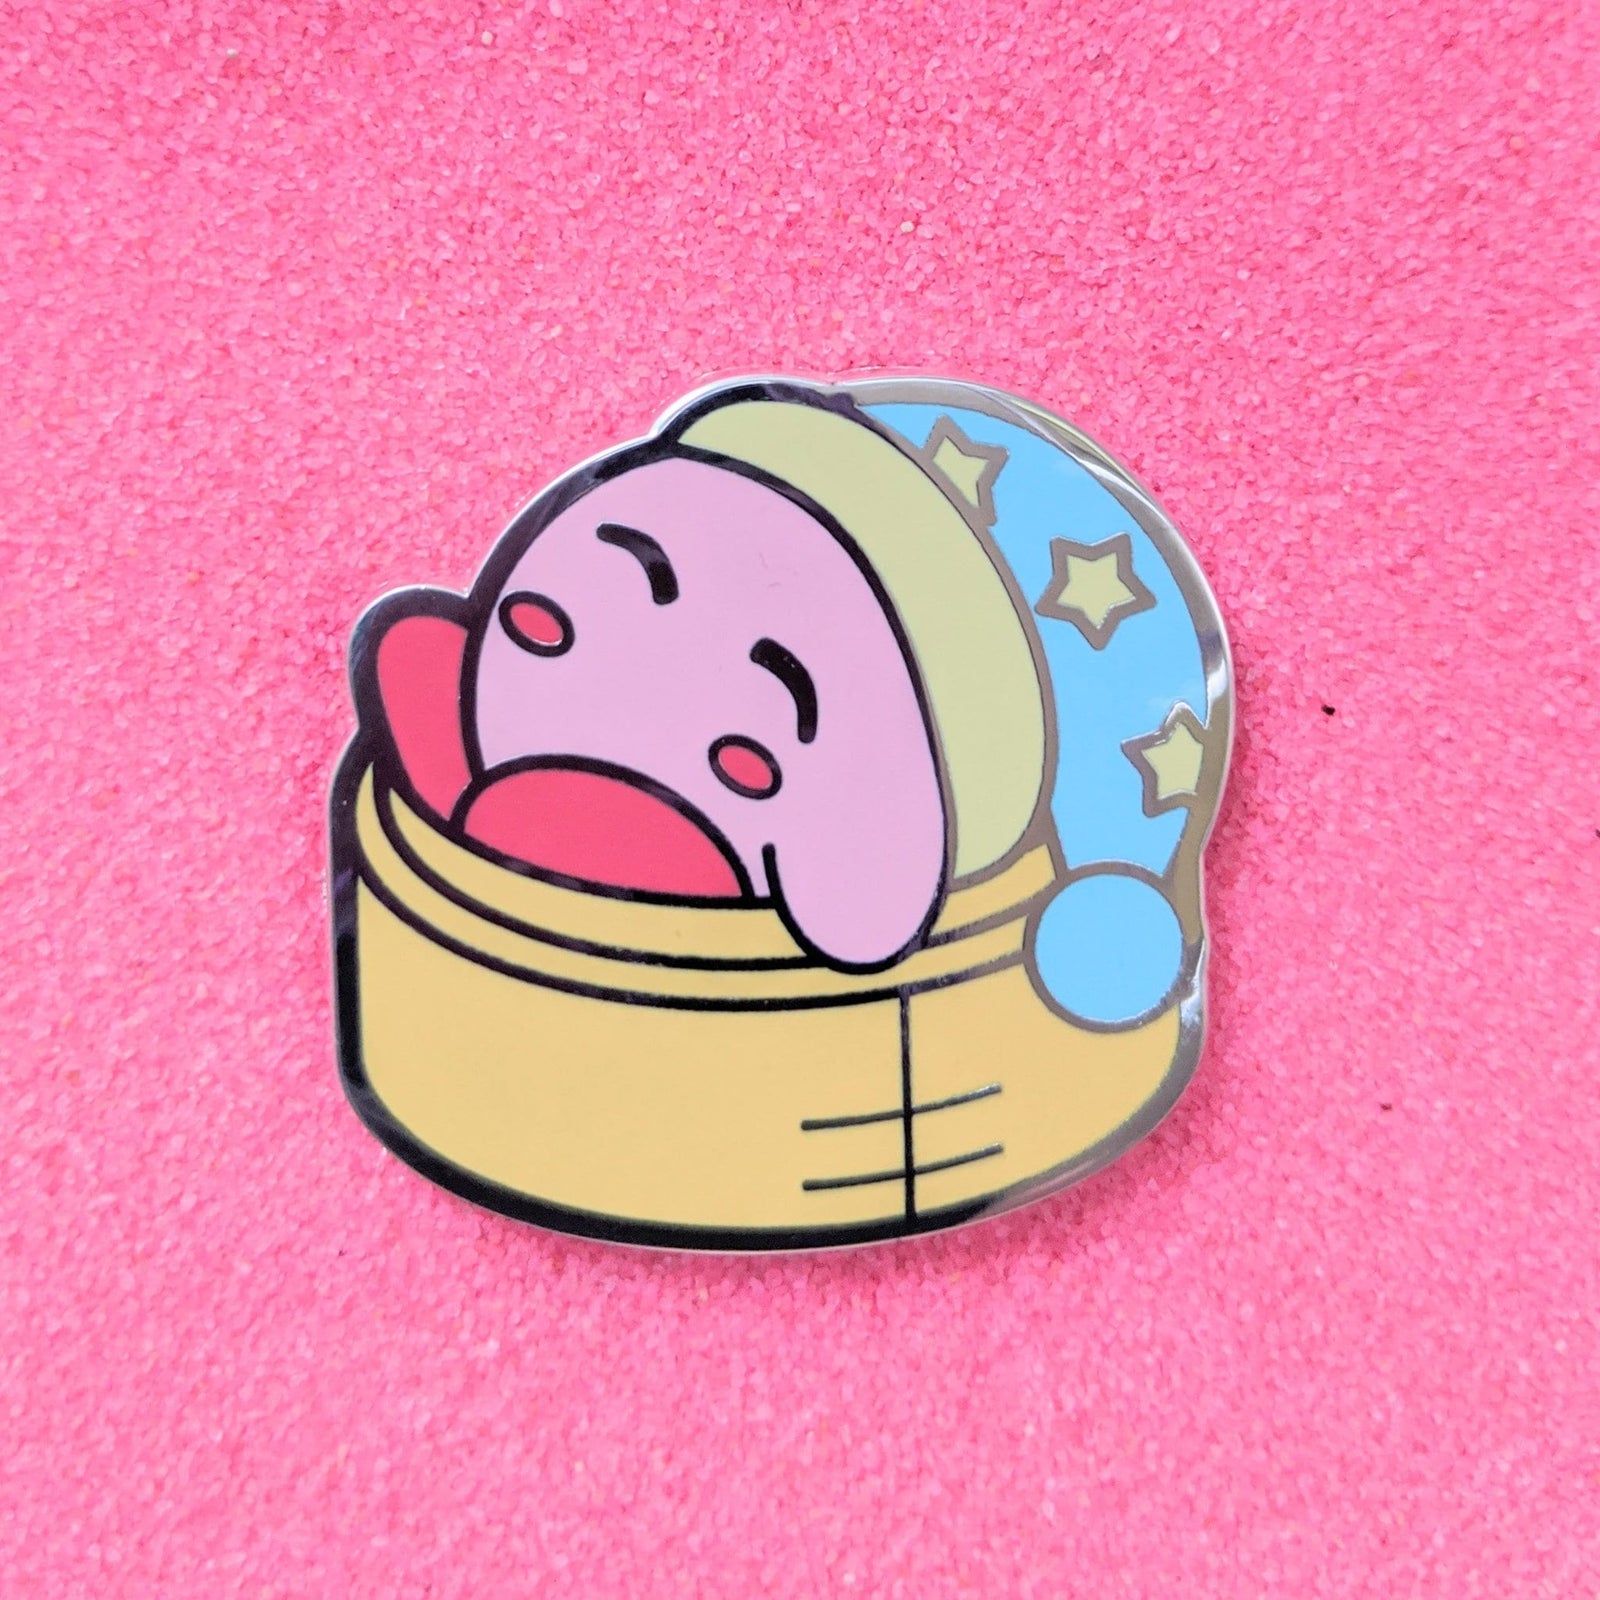 Sleeping Kirby DimSum - 1.5" Enamel Pin Lapel Metal Badge